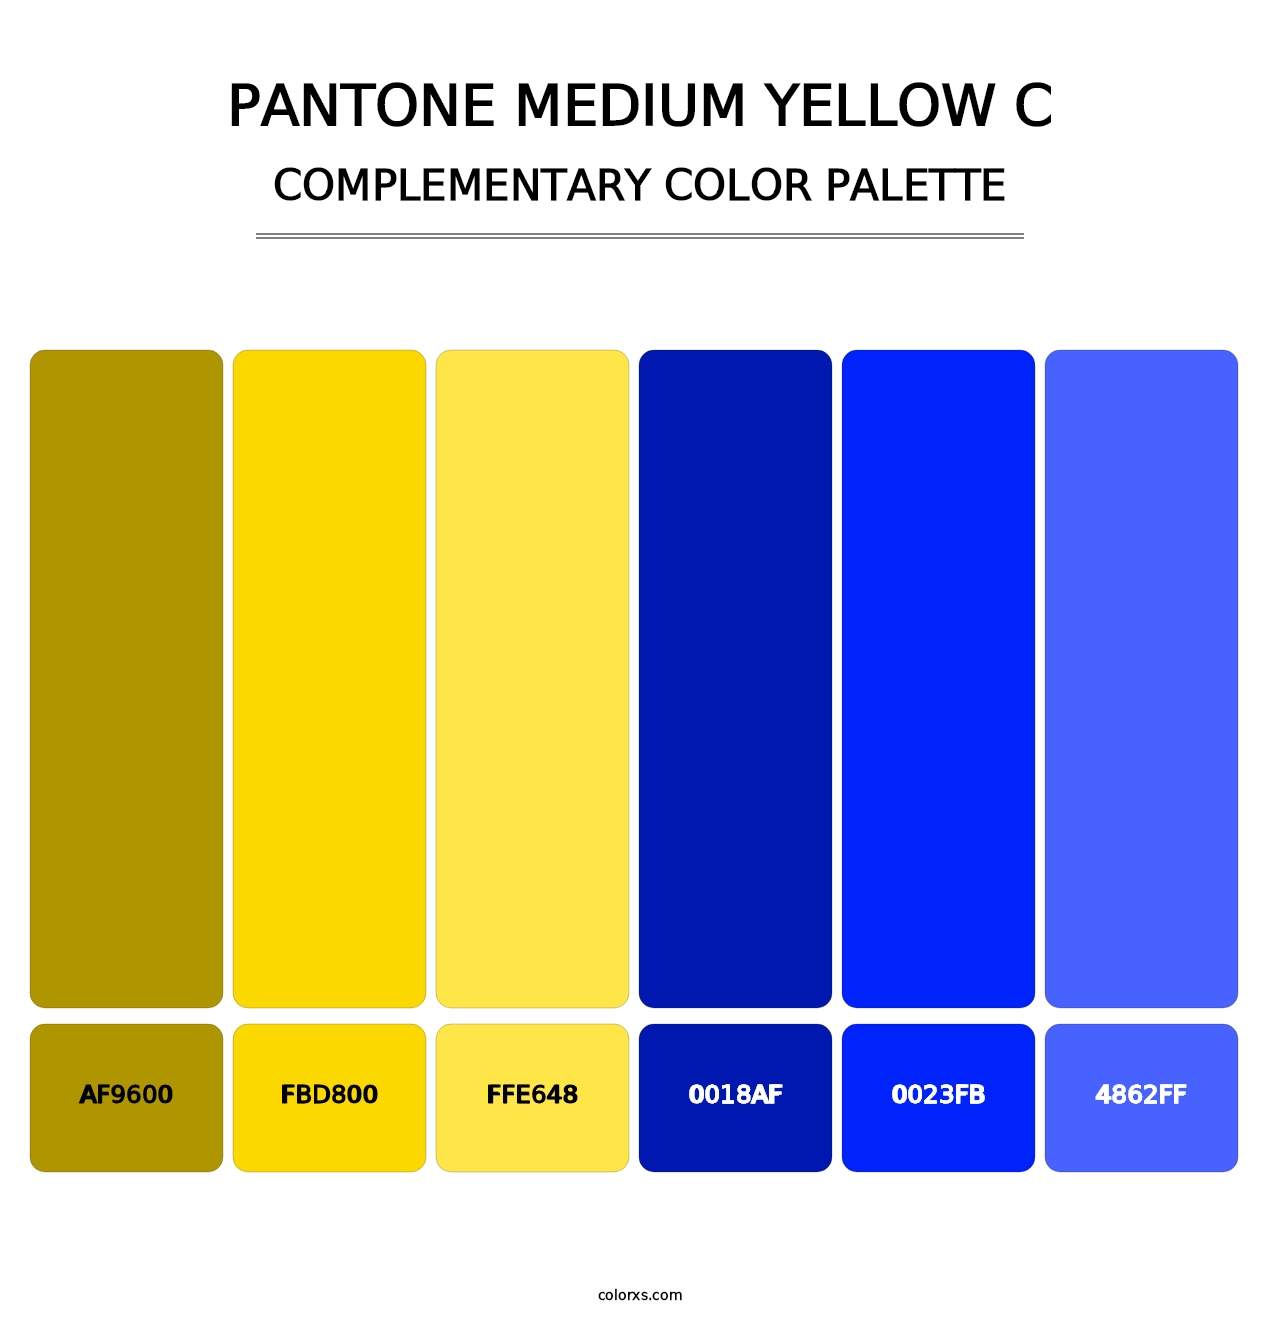 PANTONE Medium Yellow C - Complementary Color Palette